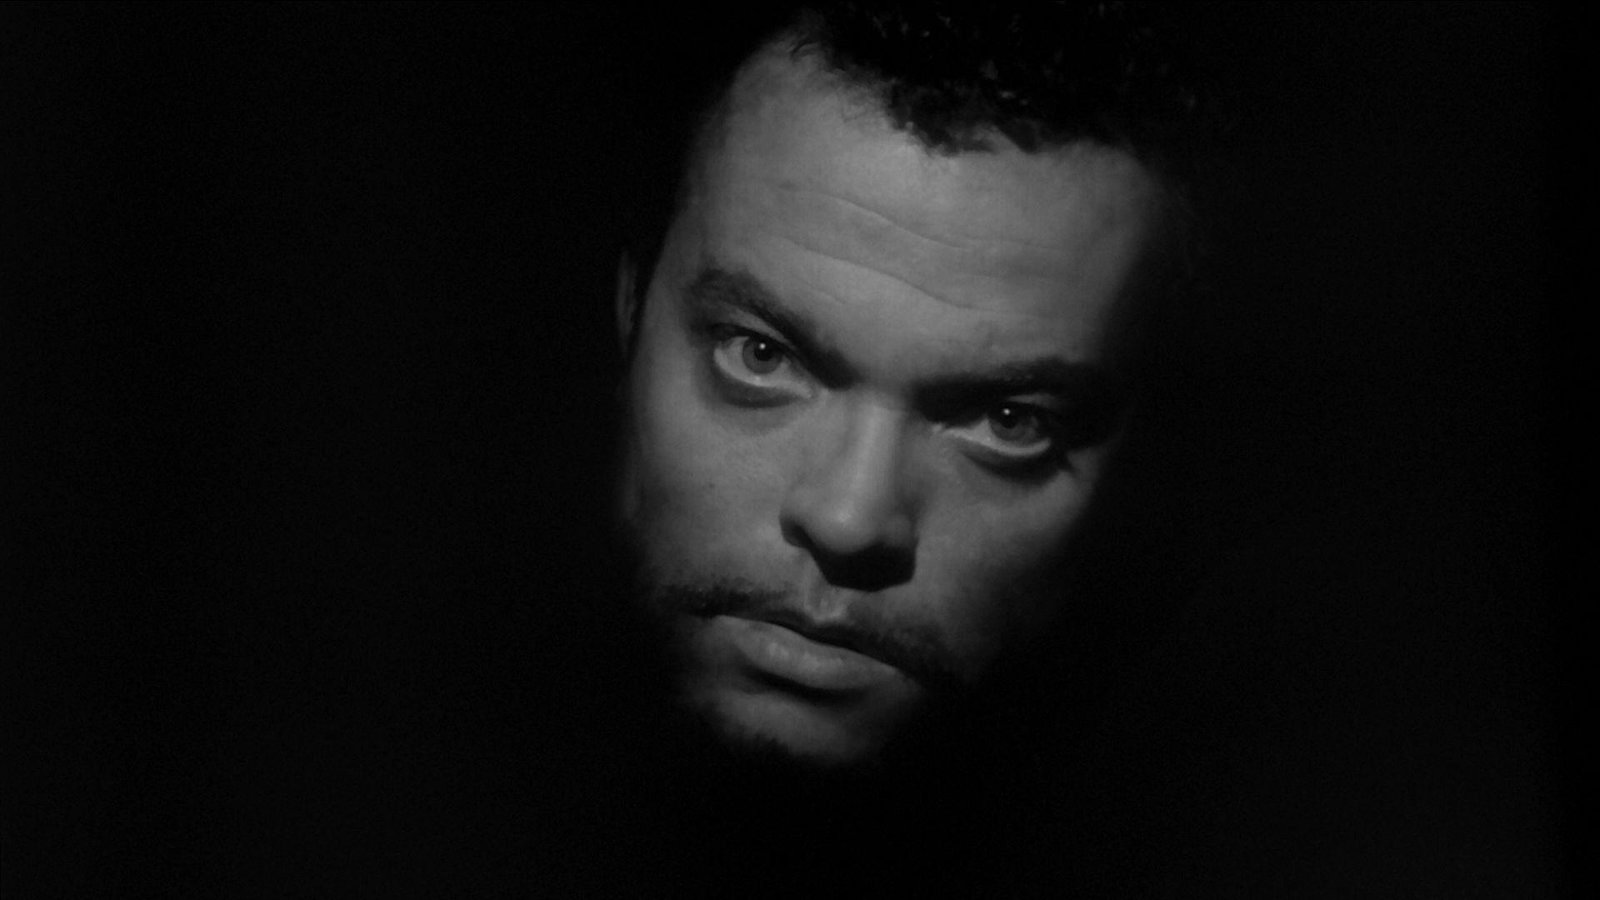 Orson Welles OTHELLO - Uncut Mediabook Edition (DVD+blu-ray)